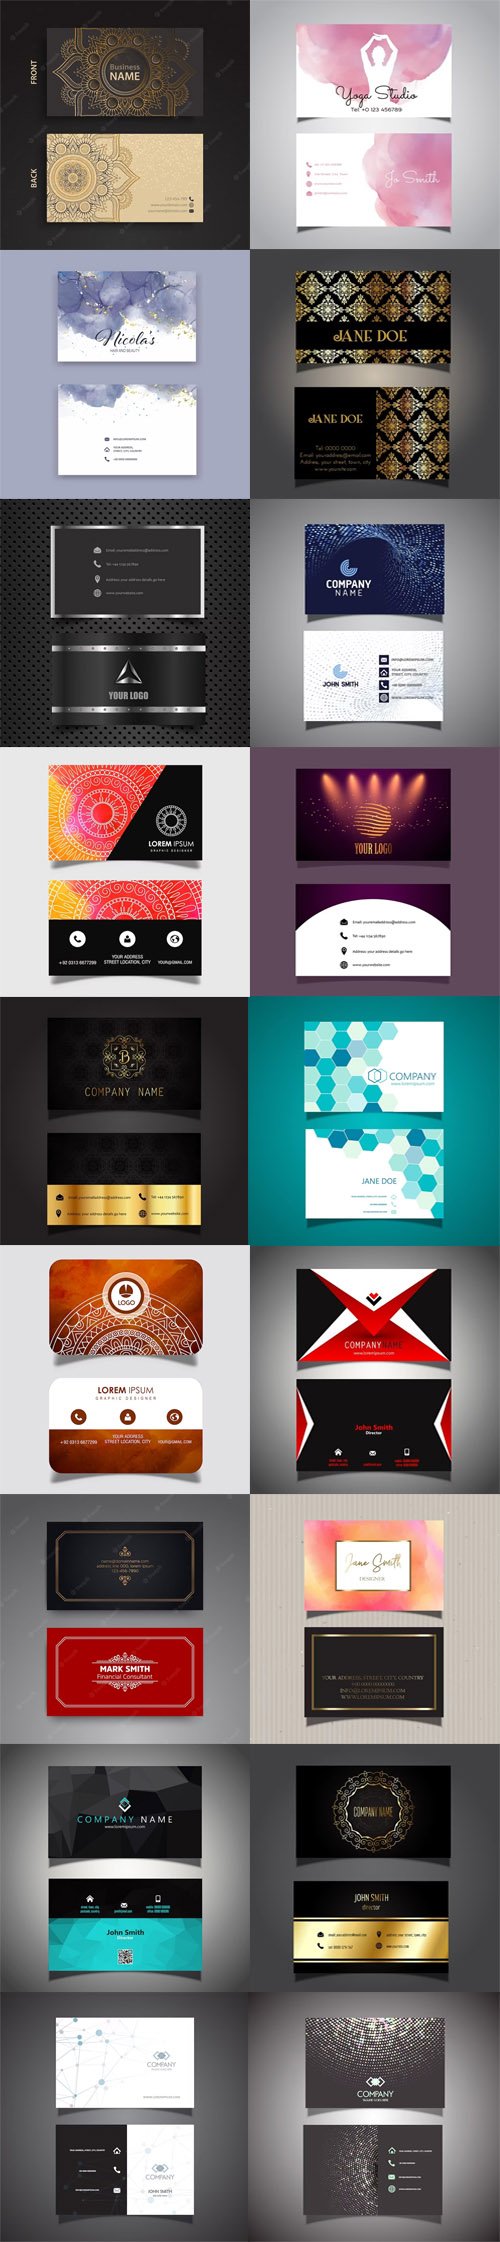 Modern Business Card Collection - 18 Creative Vector Design Templates